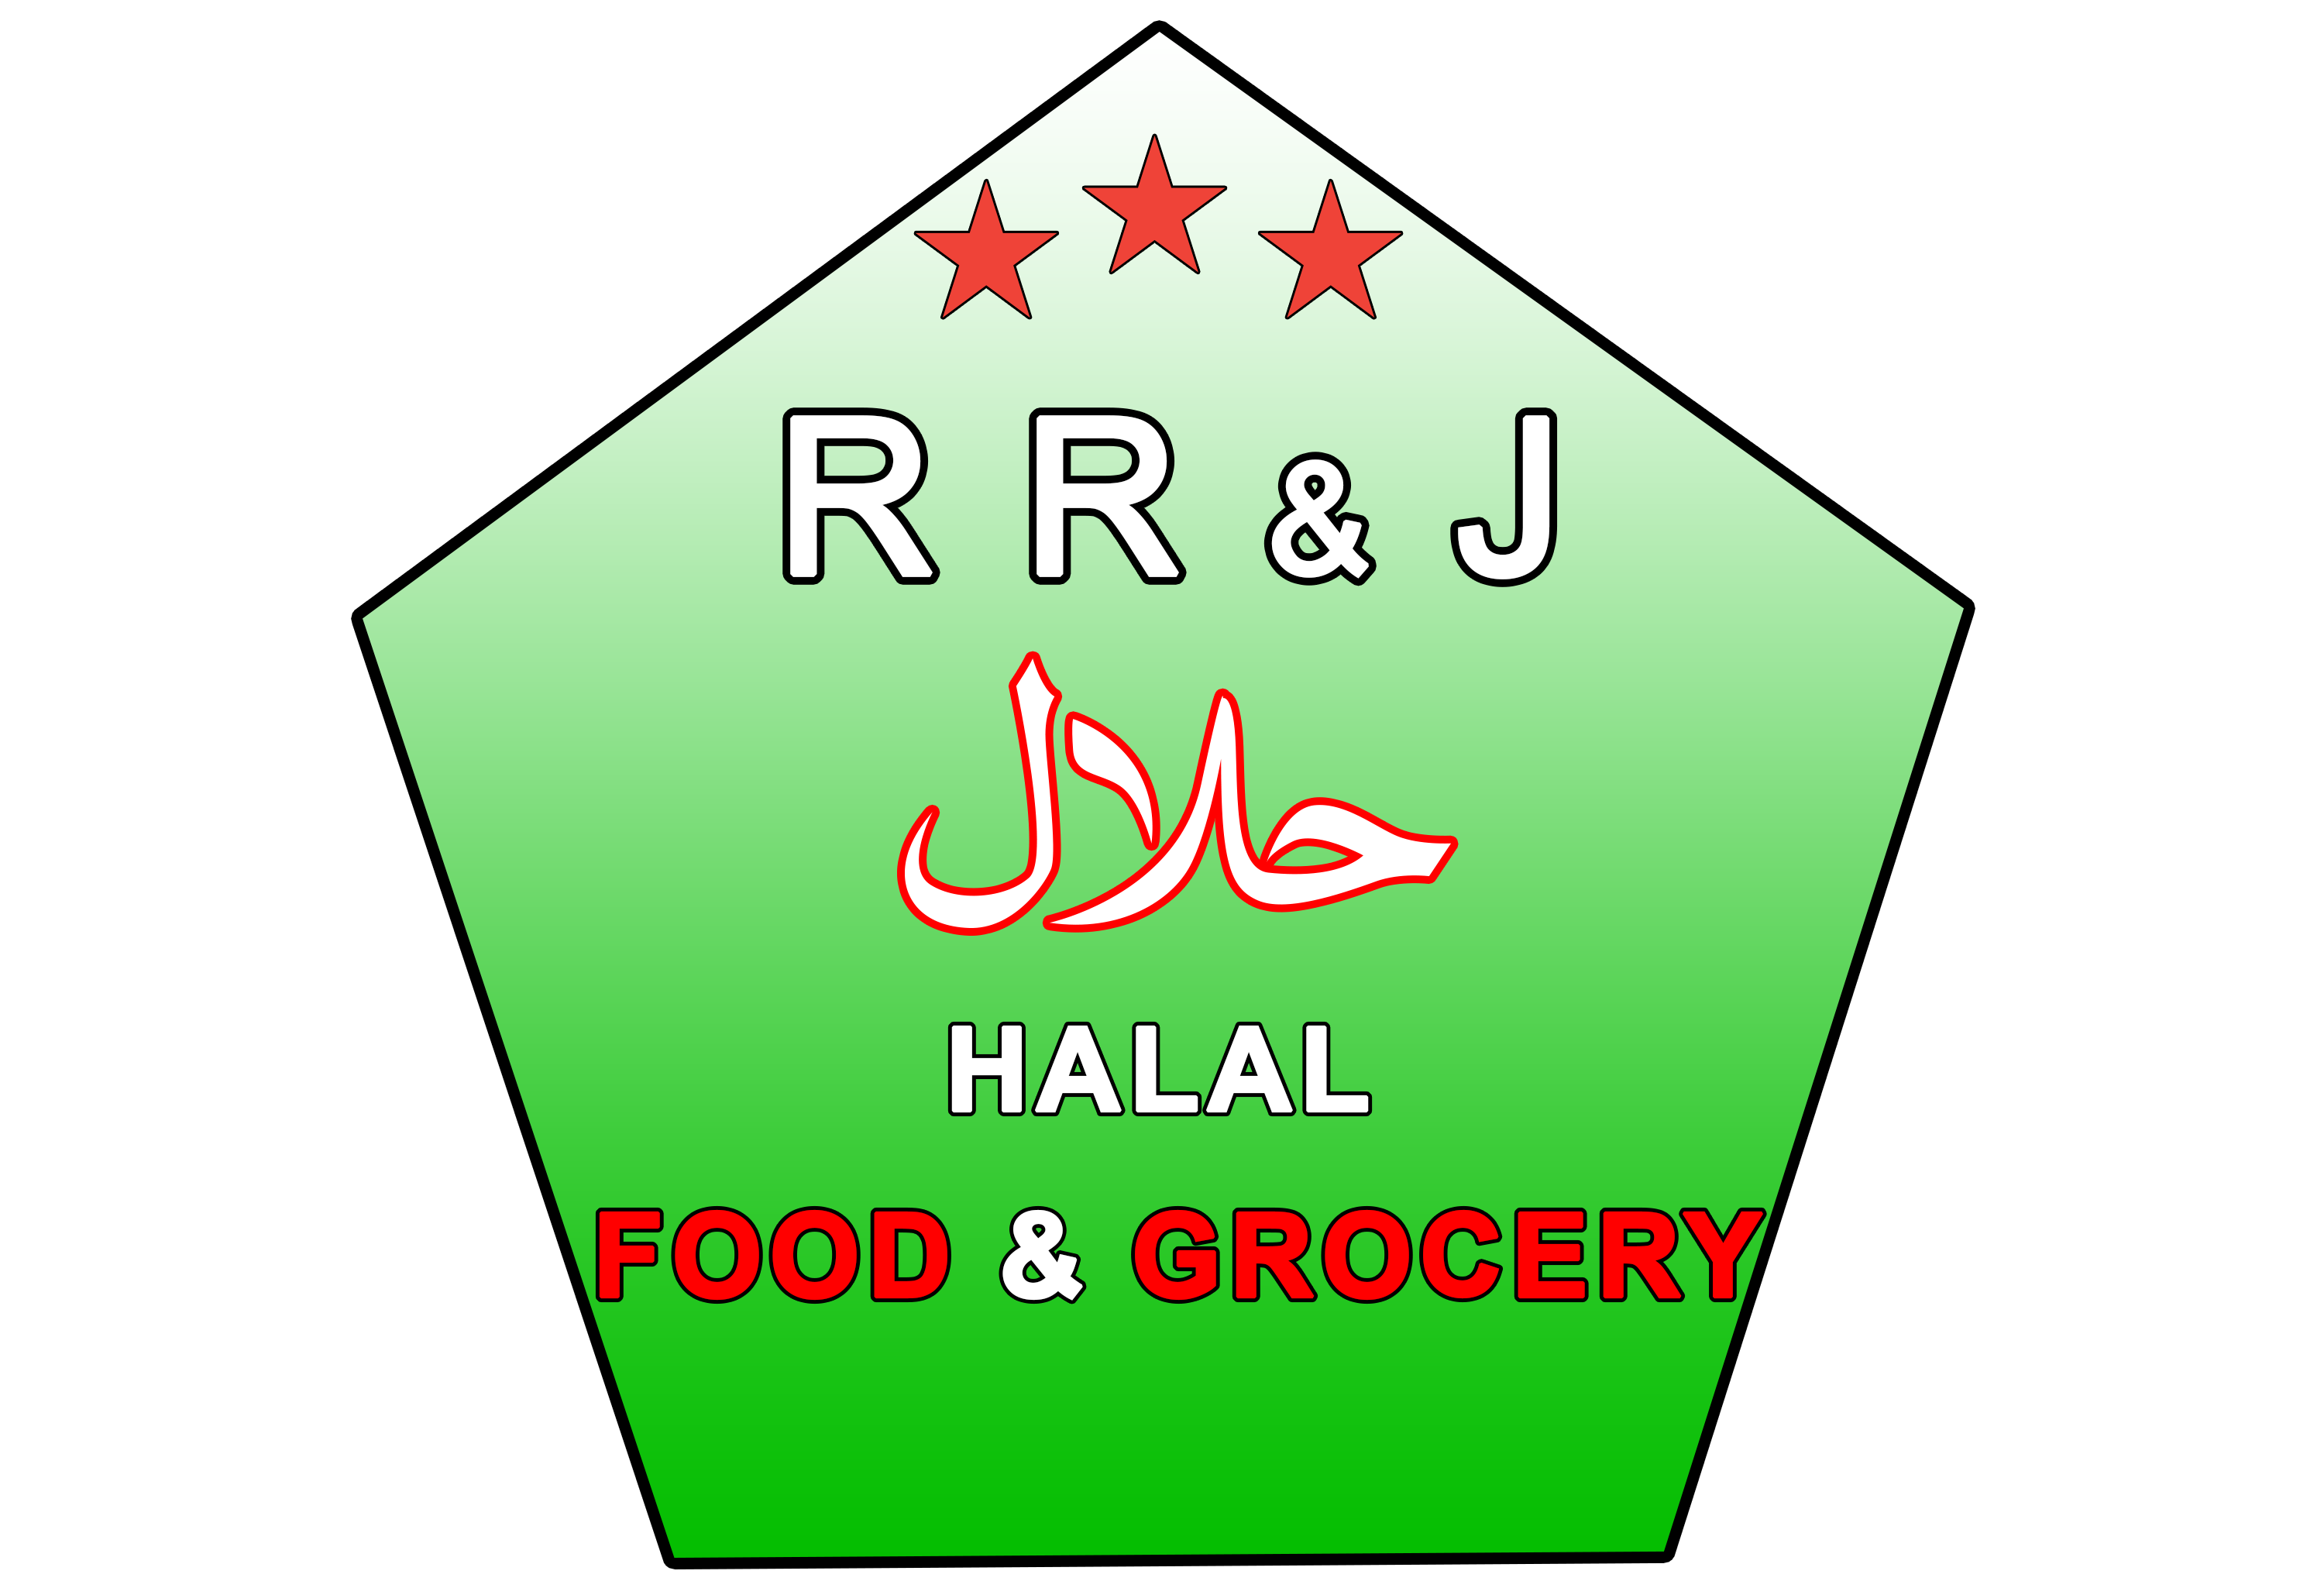 RR & J Halal Food 7 Grocery